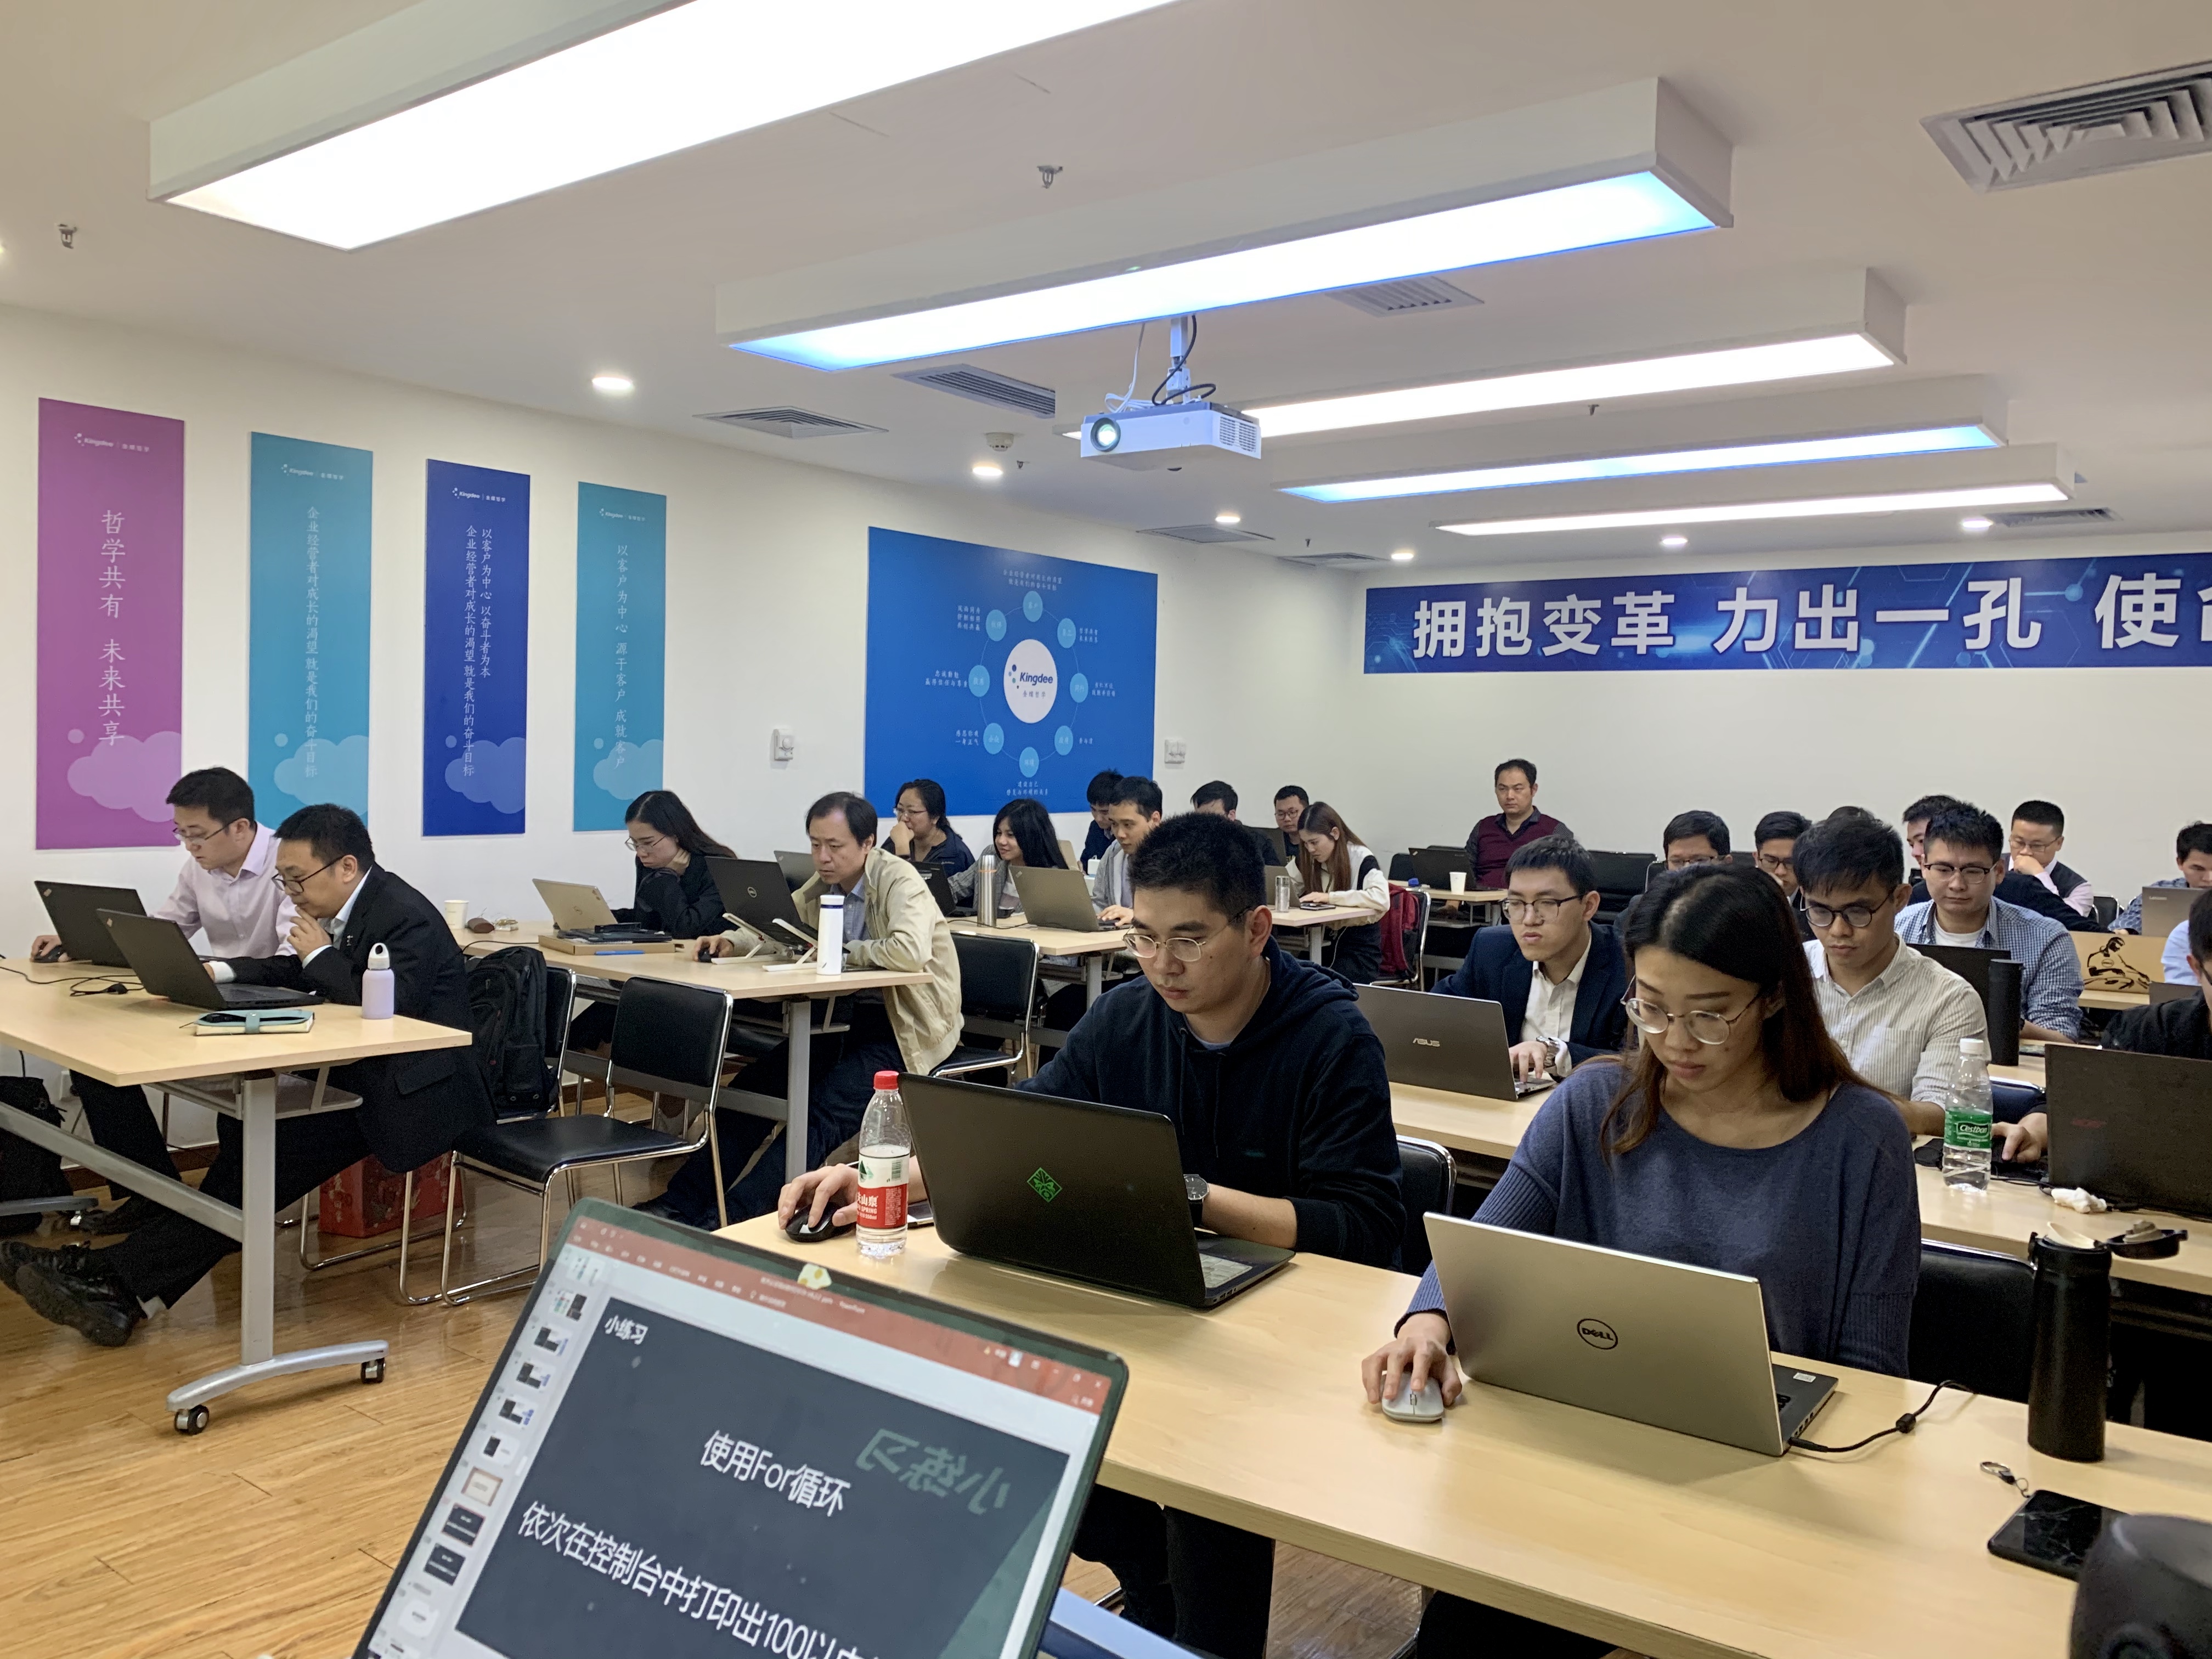 iS-RPA 技术认证培训 广州 20200110 班